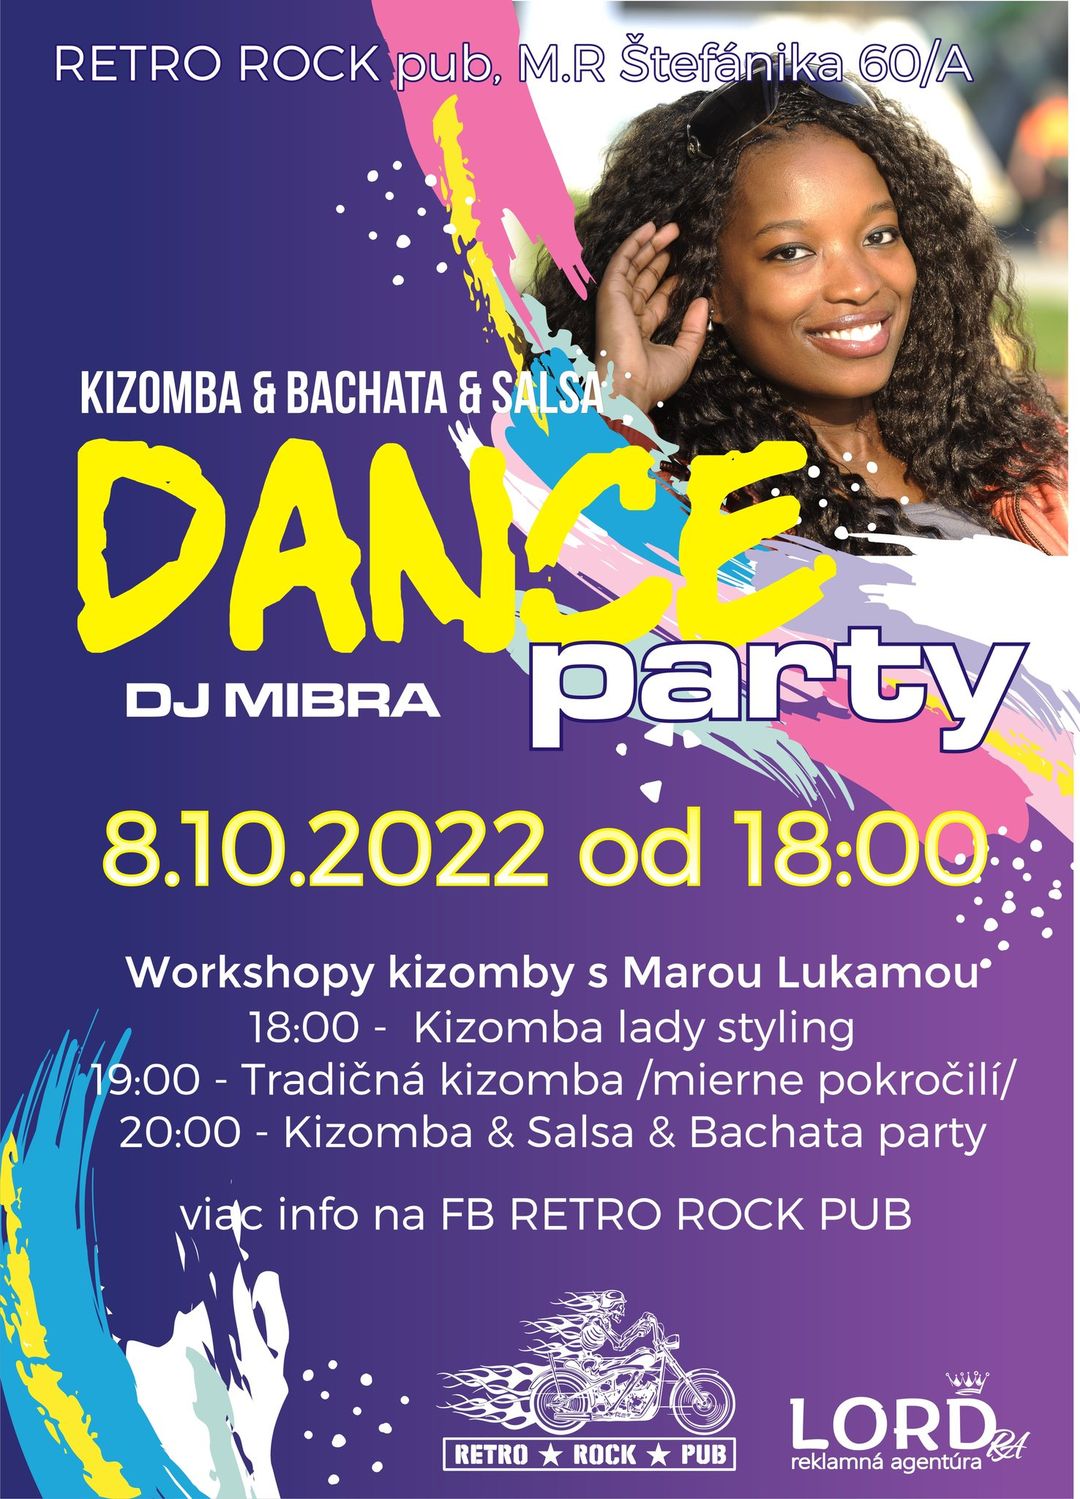 Kizomba&Salsa&Bachata party s ws kizomby RETRO ROCK PUB